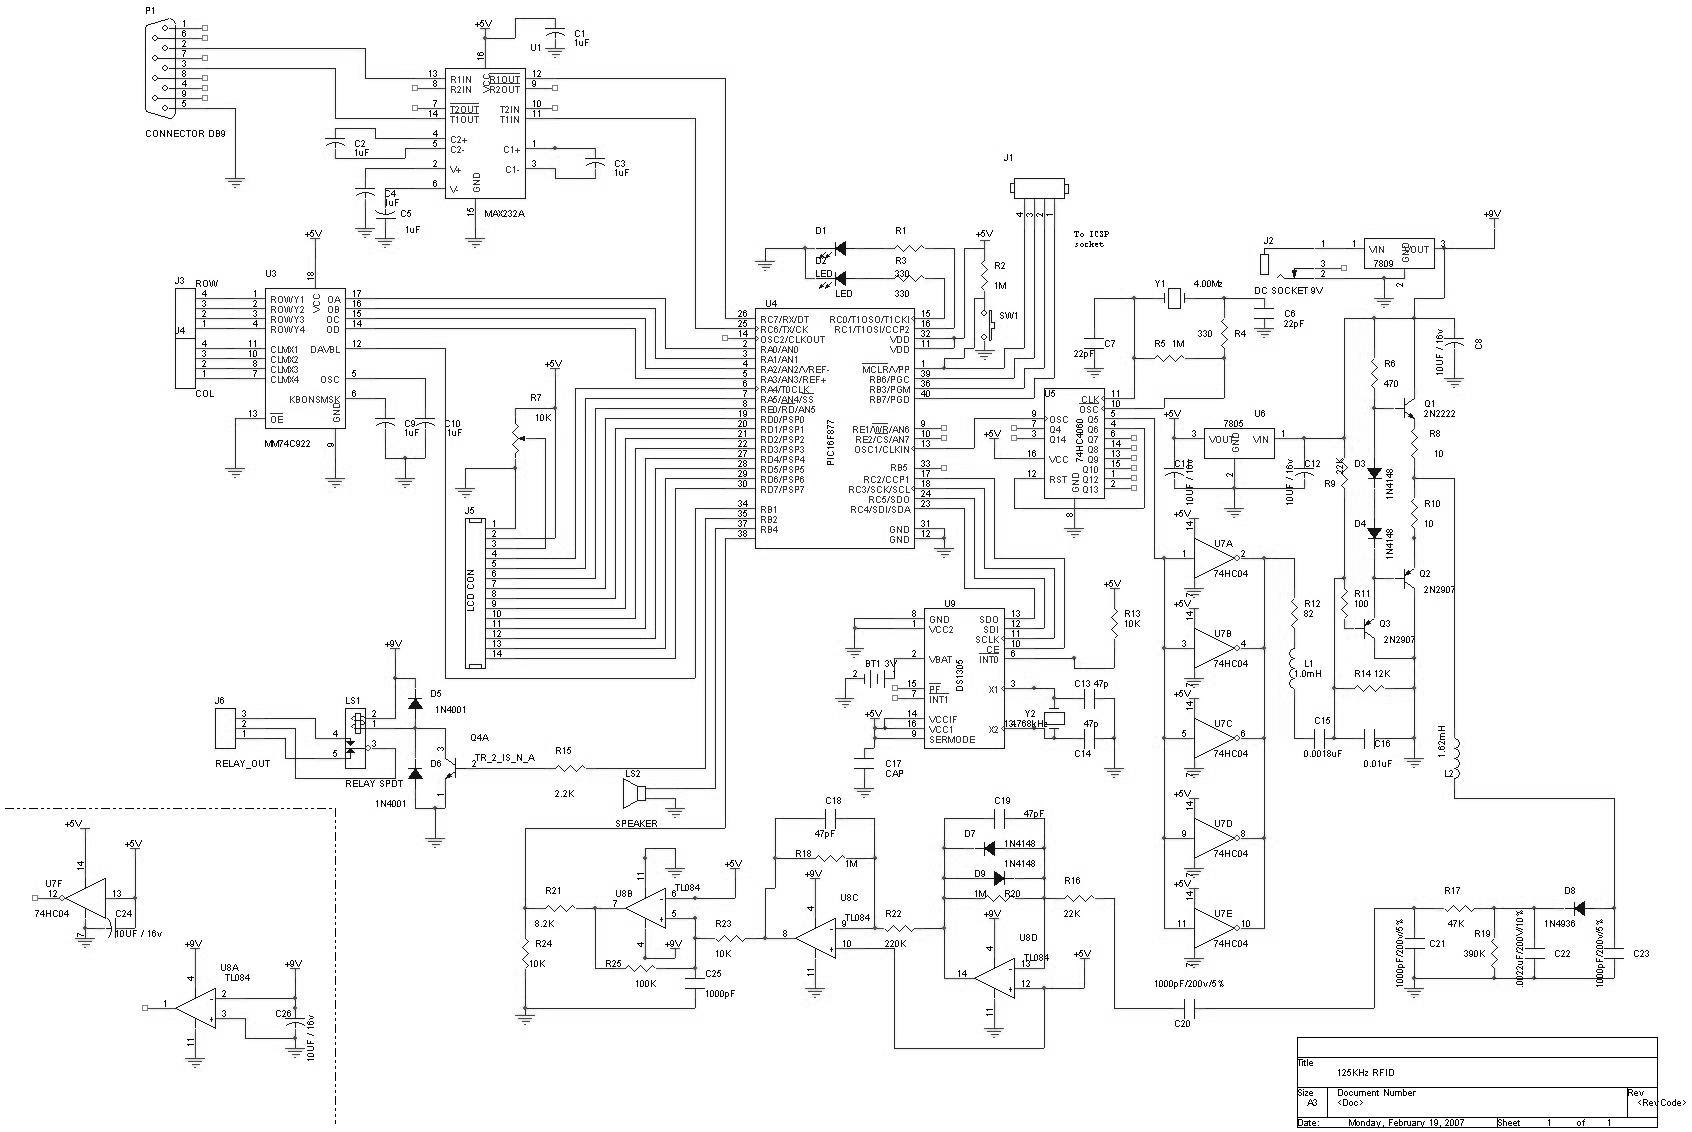 Circuit Board Wiring Diagram - espressorose